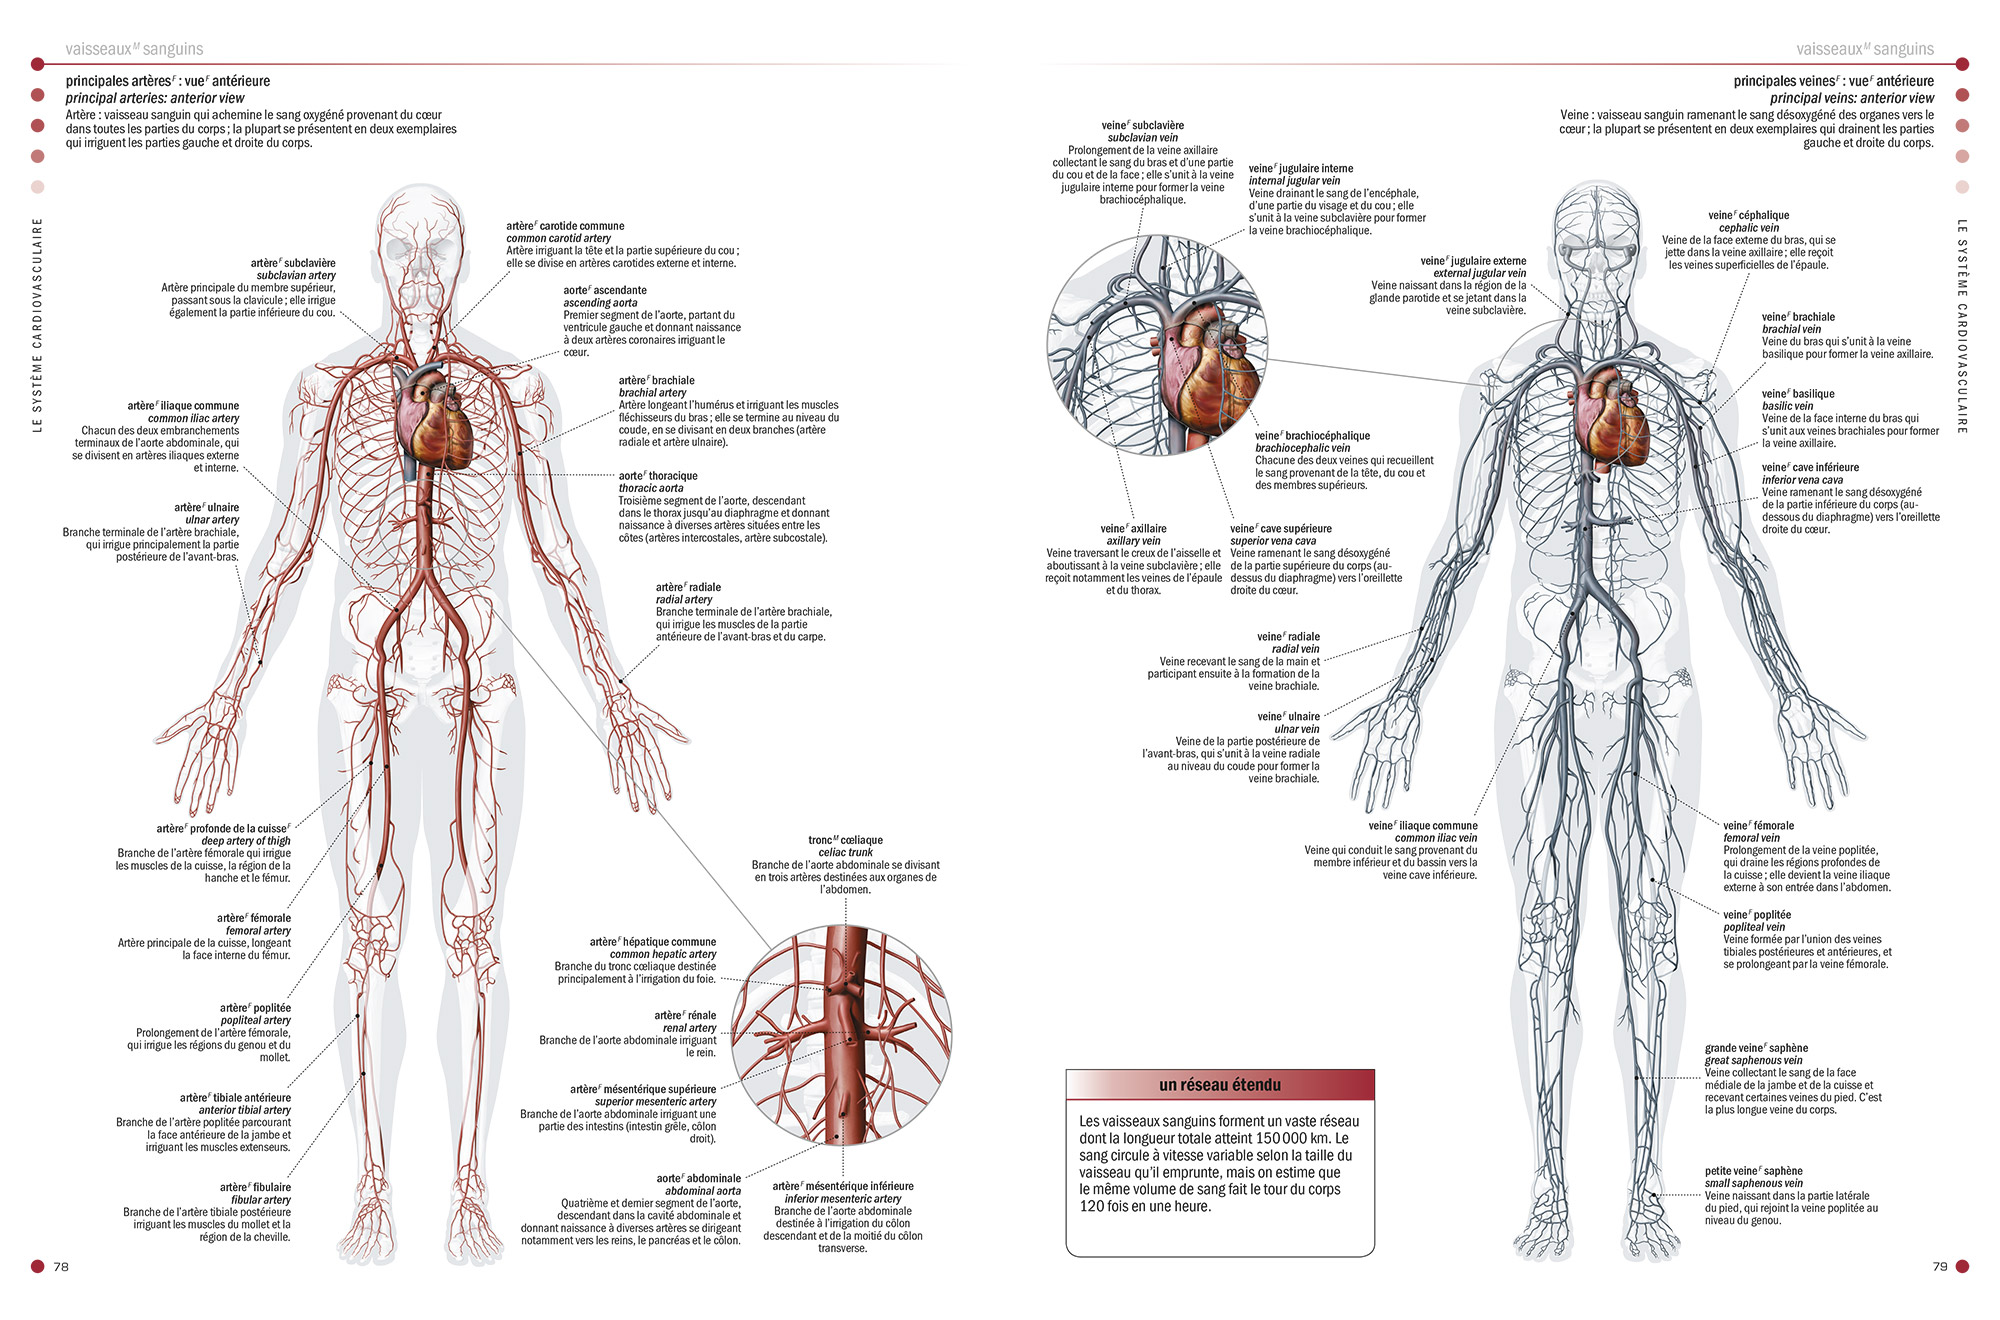 The Visual Dictionary of the Human Body - QA international